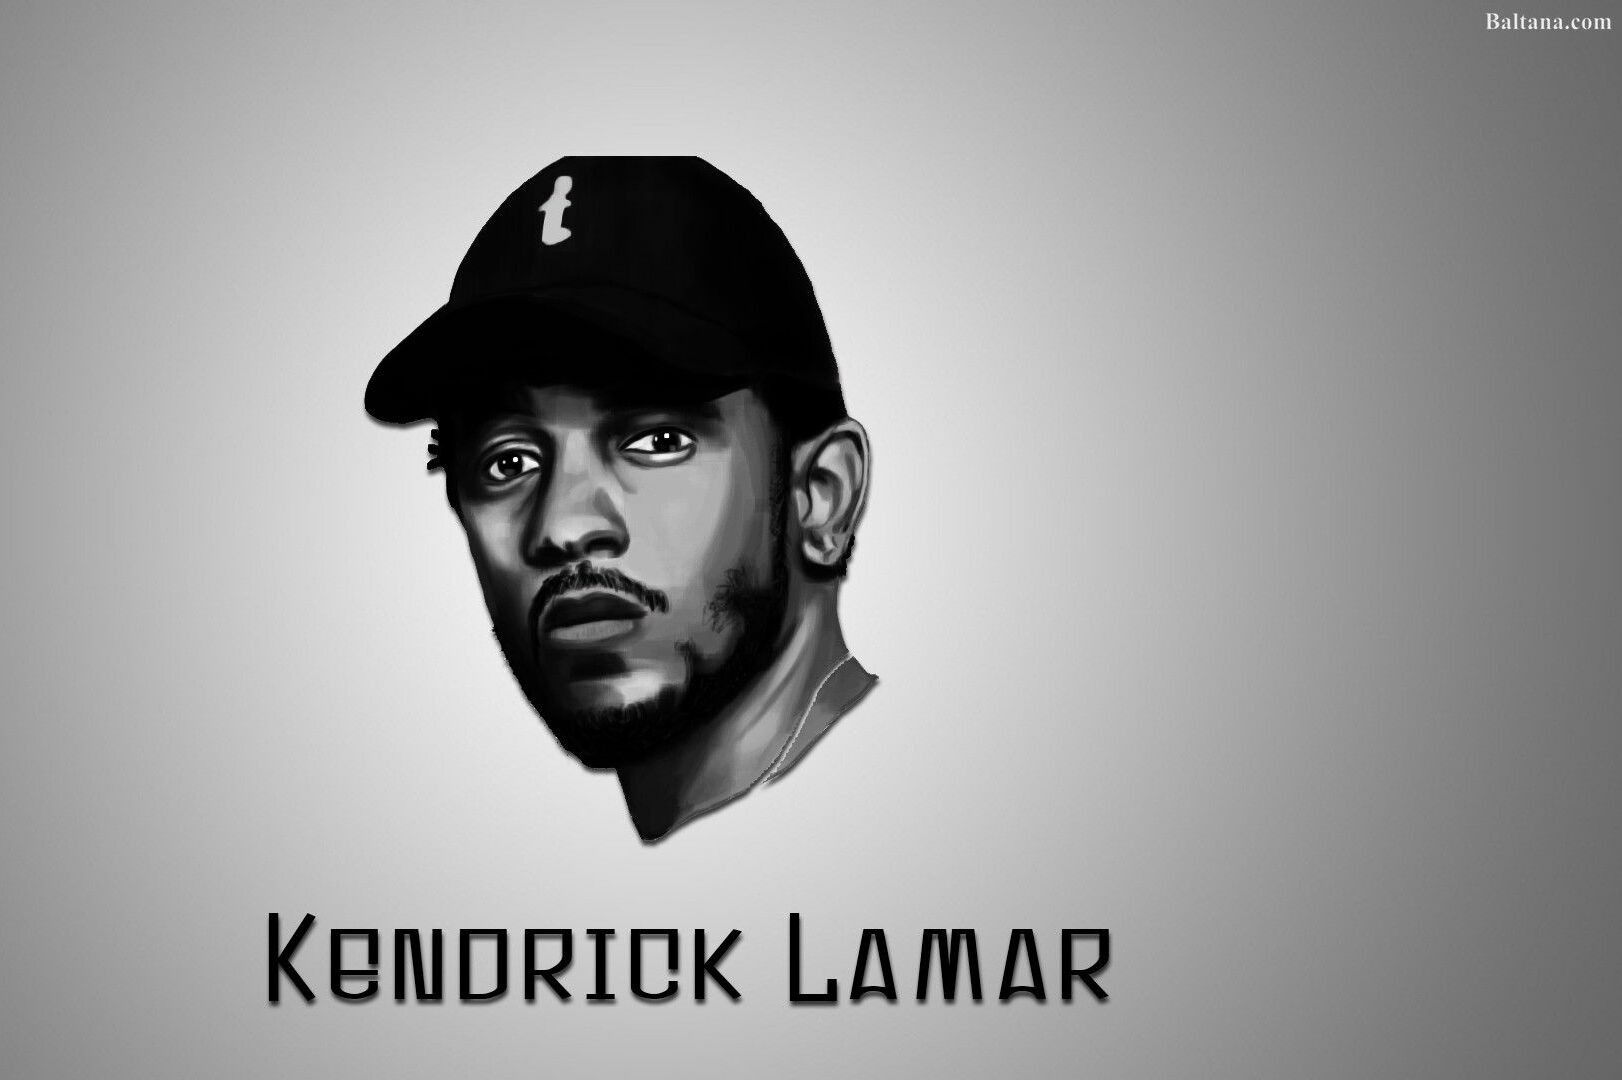 Kendrick Lamar has new music on the way